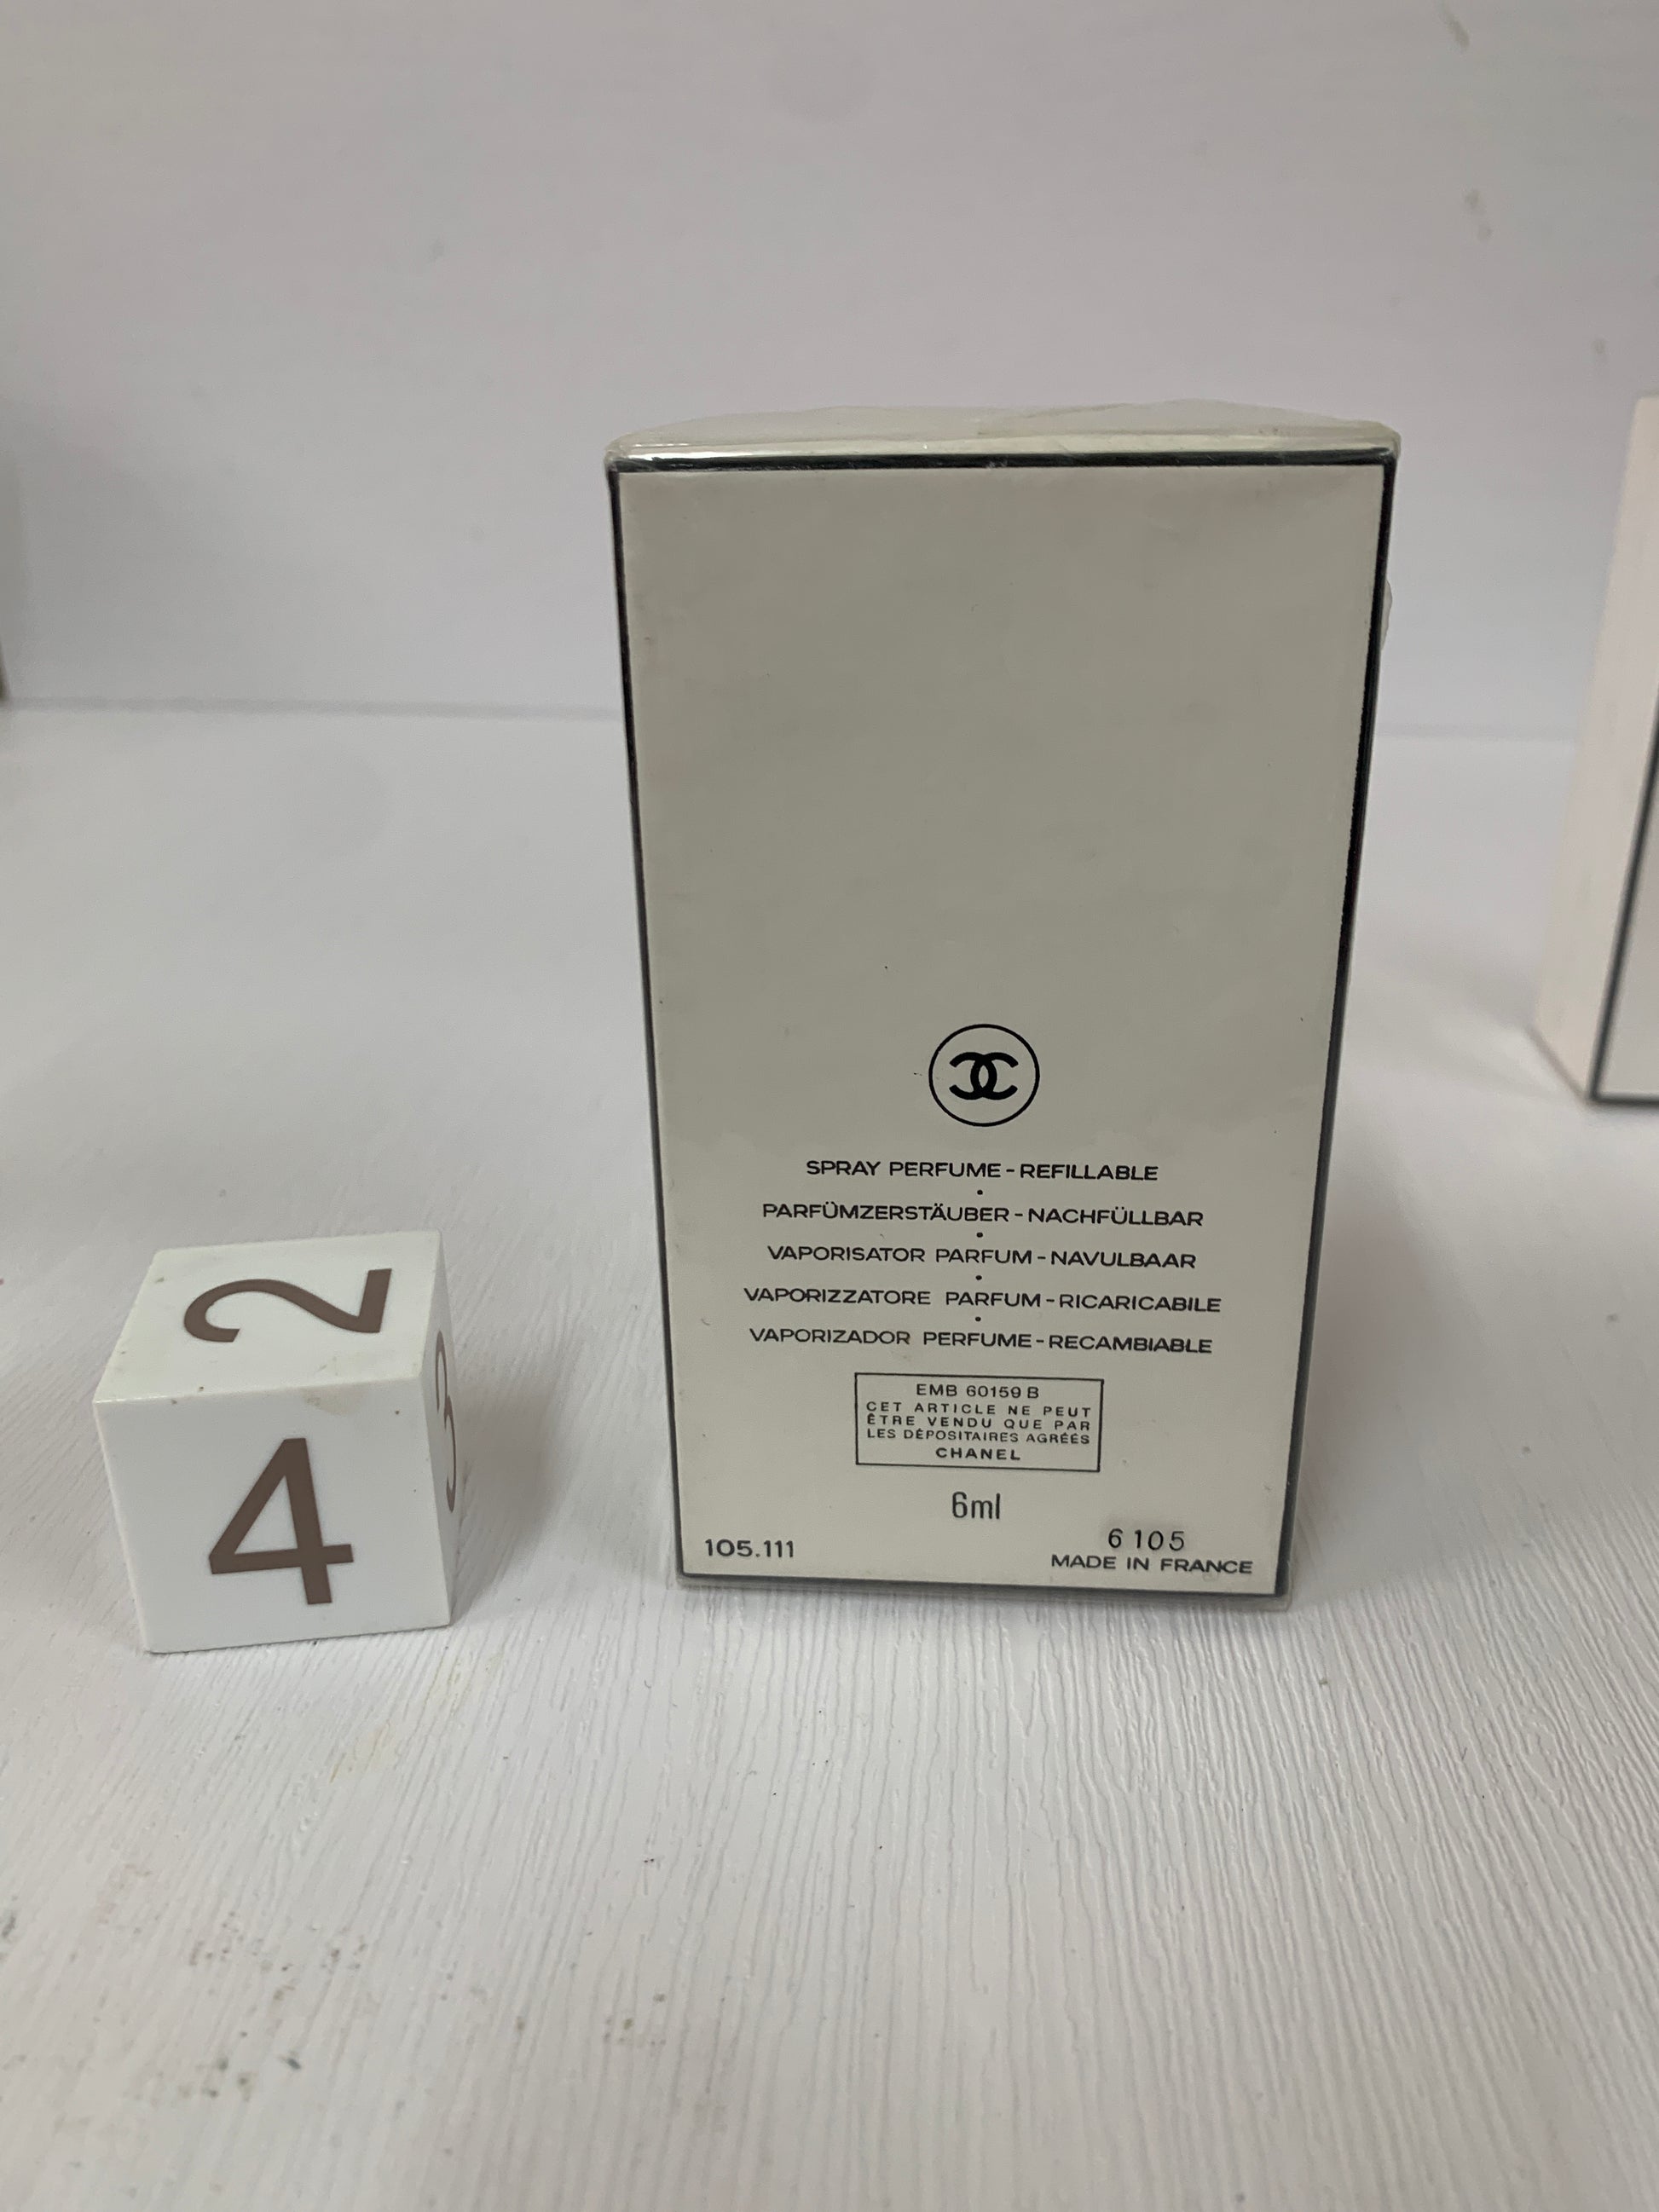 Chanel N5 - Perfume (mini size) (refill)